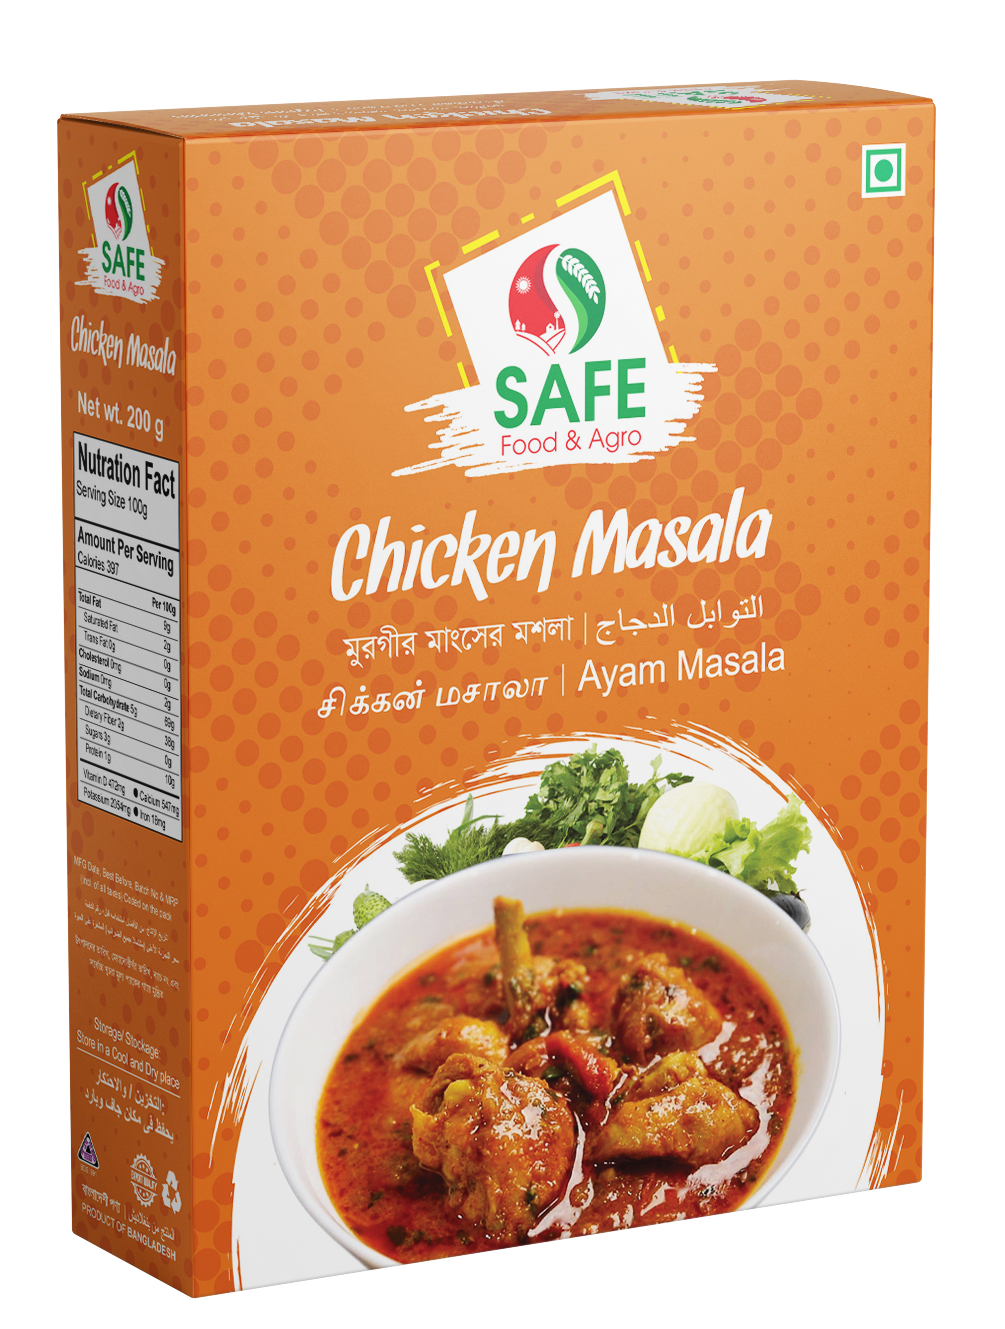 Chicken Masala Box